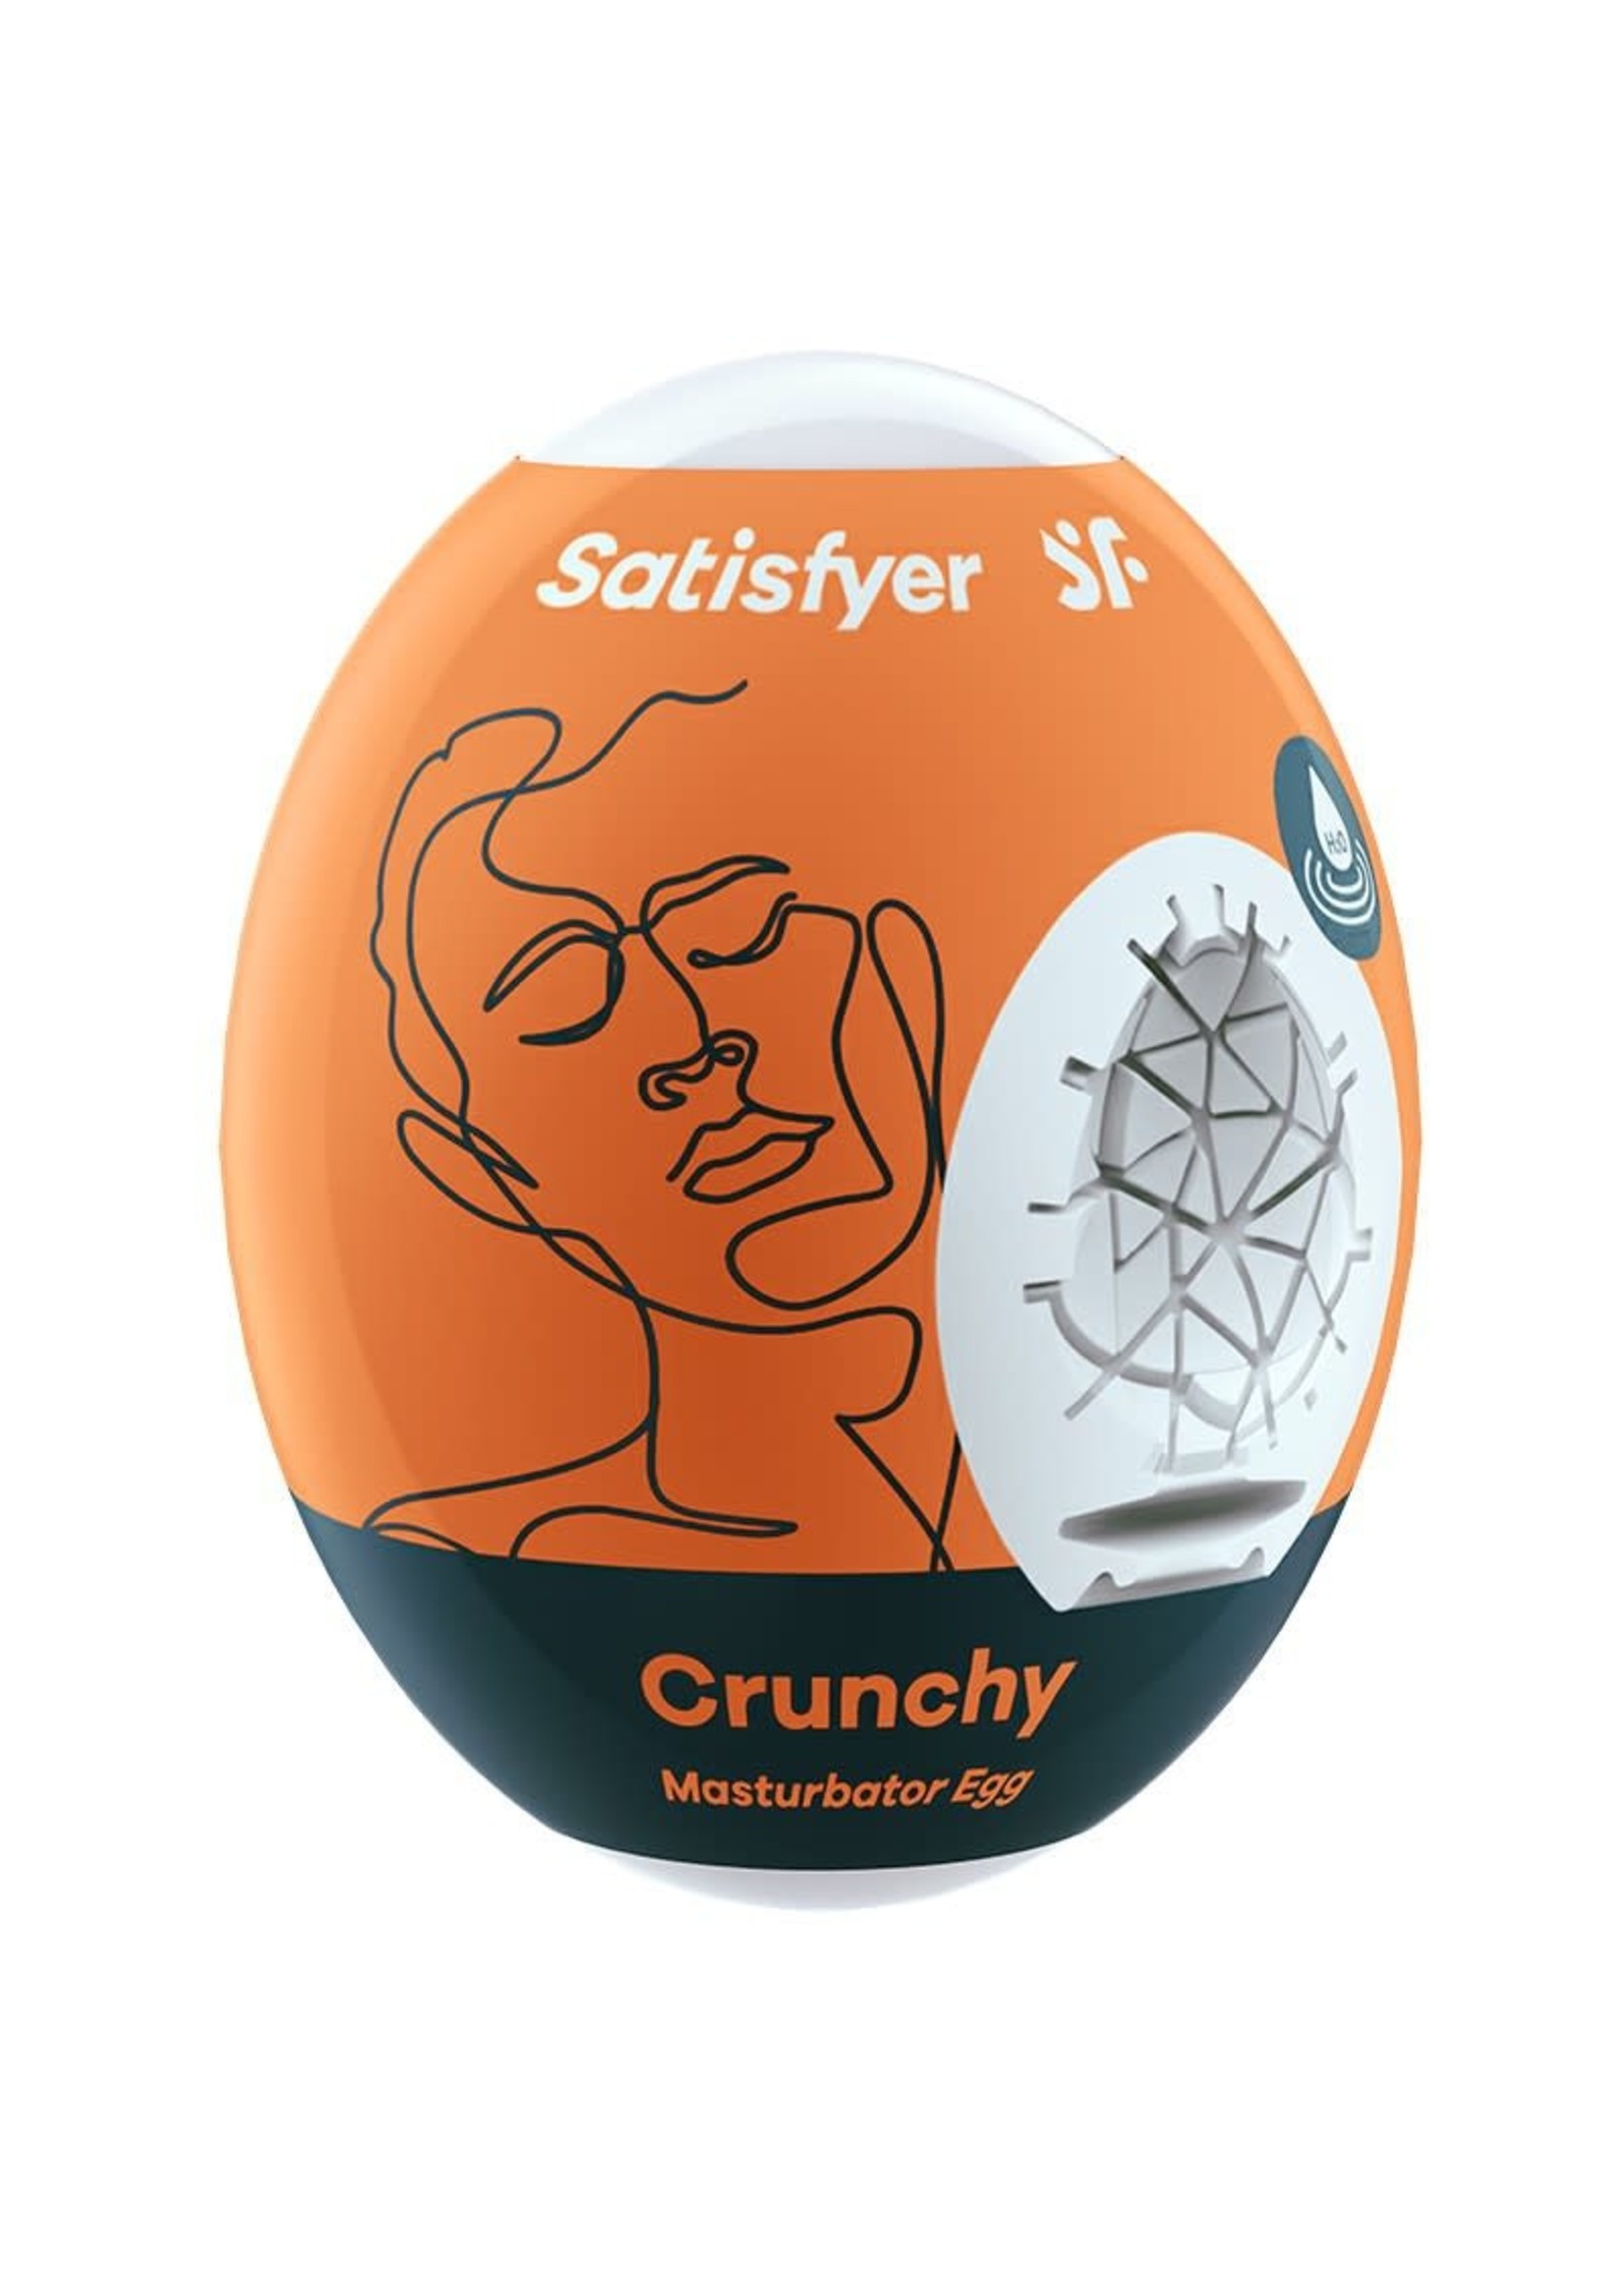 Satisfyer Masturbator egg Crunchy